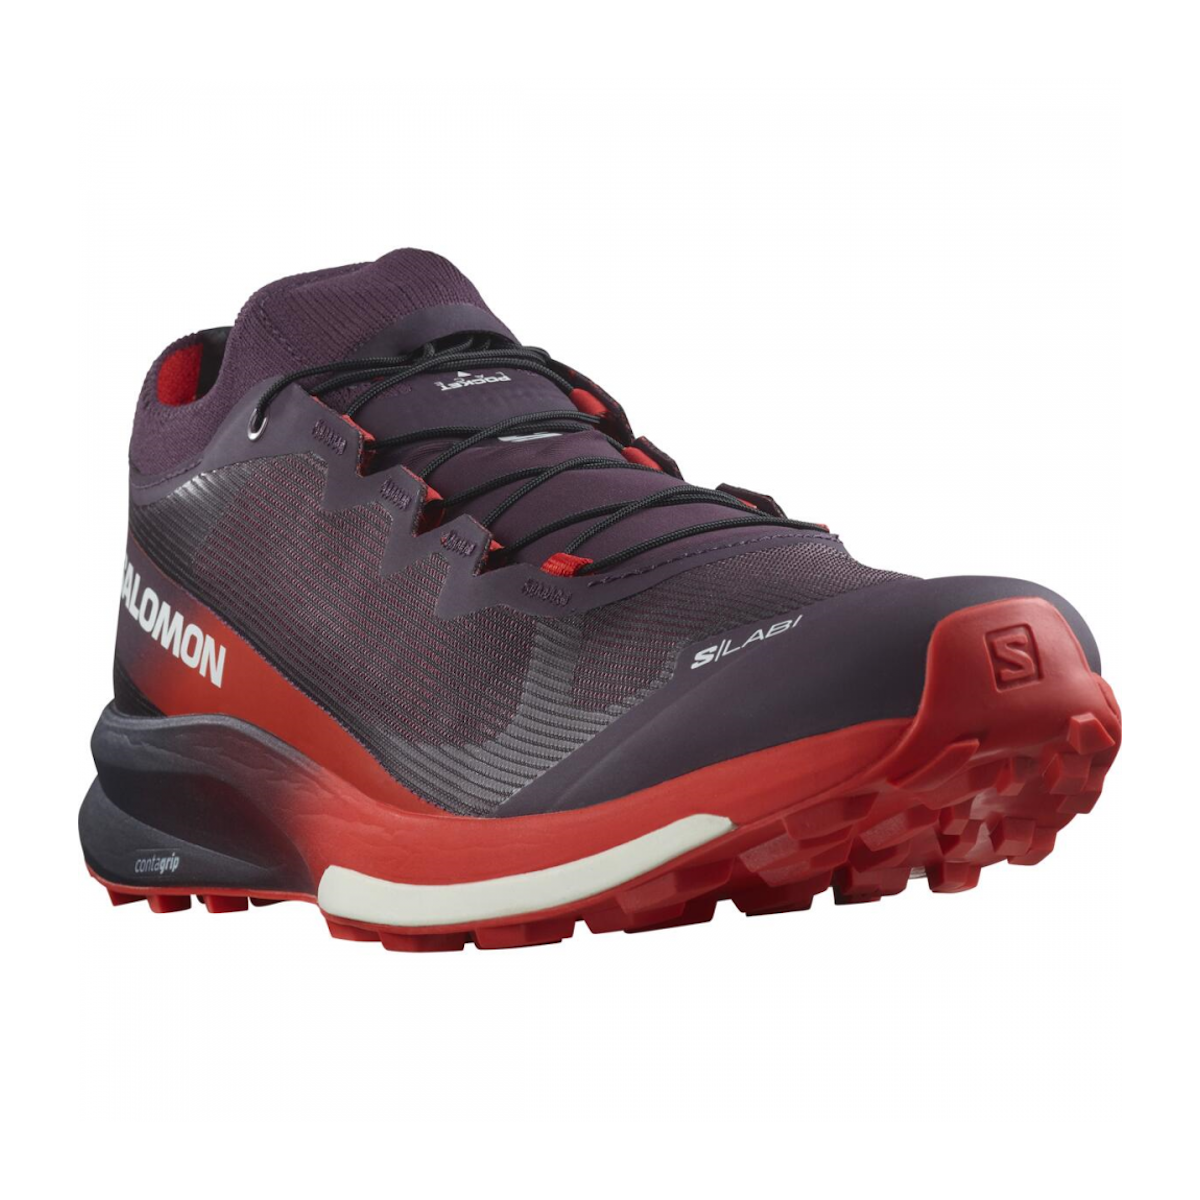 SALOMON S/LAB ULTRA 3 V2 trail running shoes - violet/red